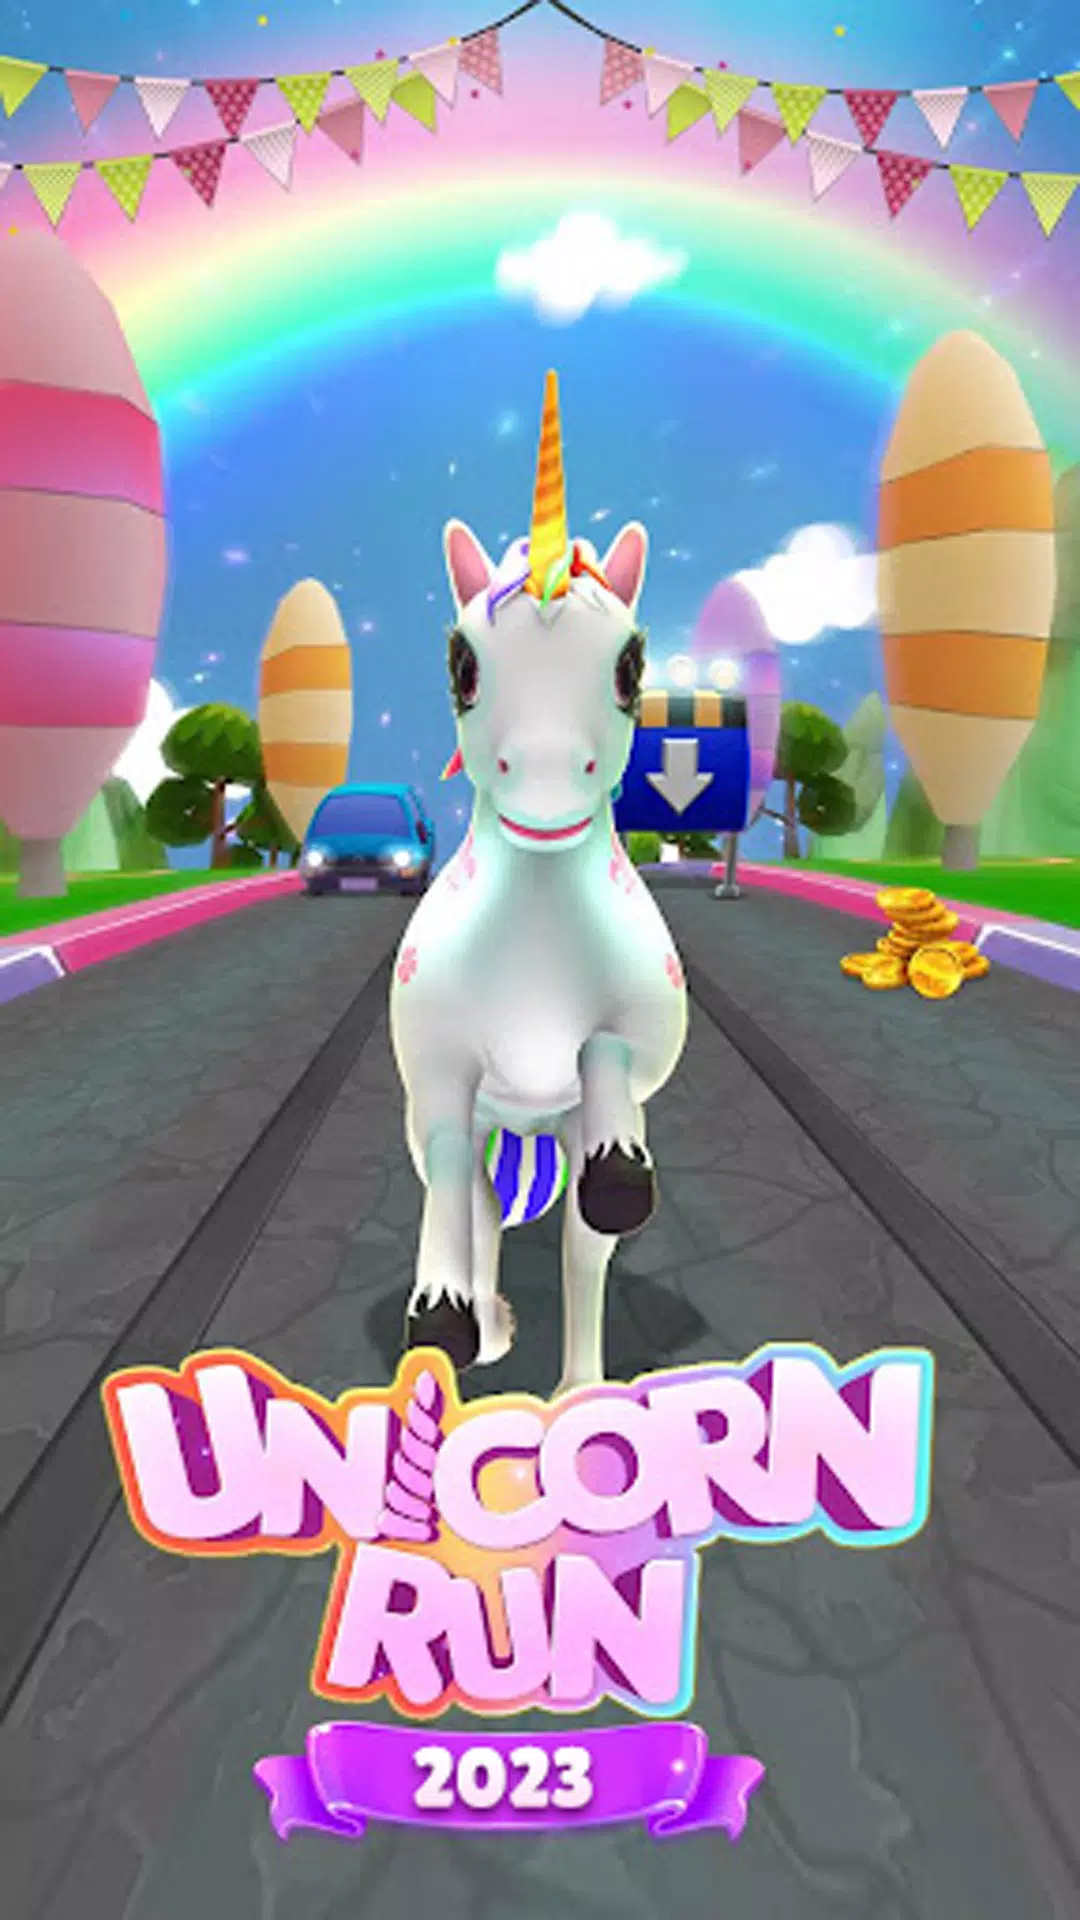 Download do APK de Jogos de Cavalos: Unicórnio 3D para Android